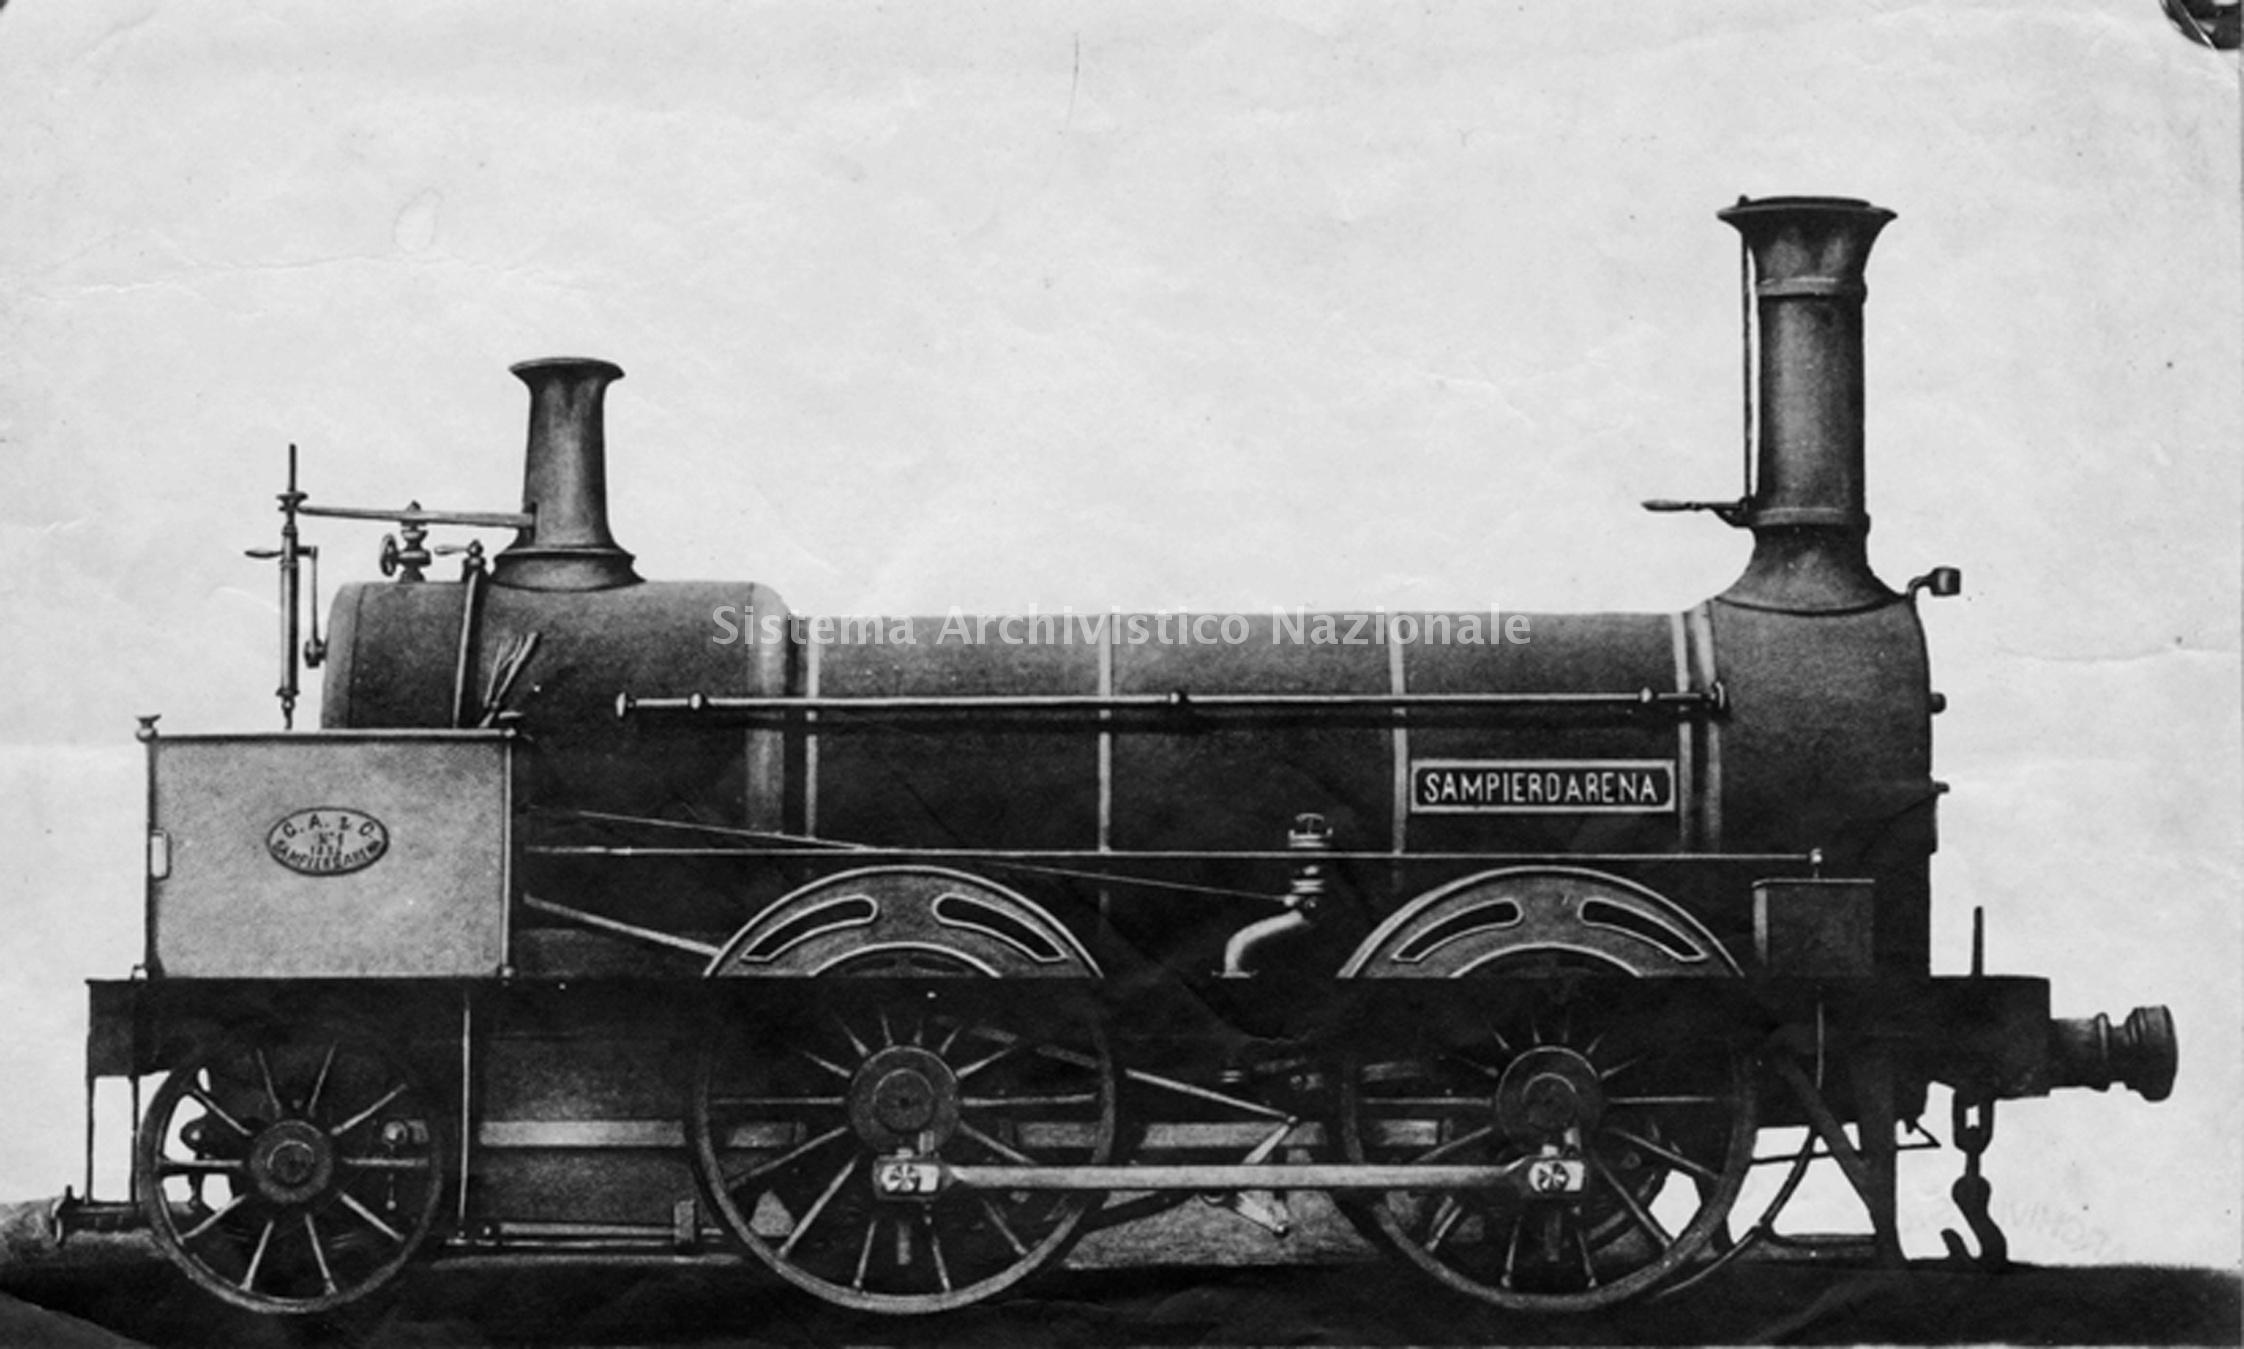   Locomotiva a vapore costruita nello Stabilimento meccanico Ansaldo di Sampierdarena (GE), 1854 (Fondazione Ansaldo, fondo Ansaldo).
